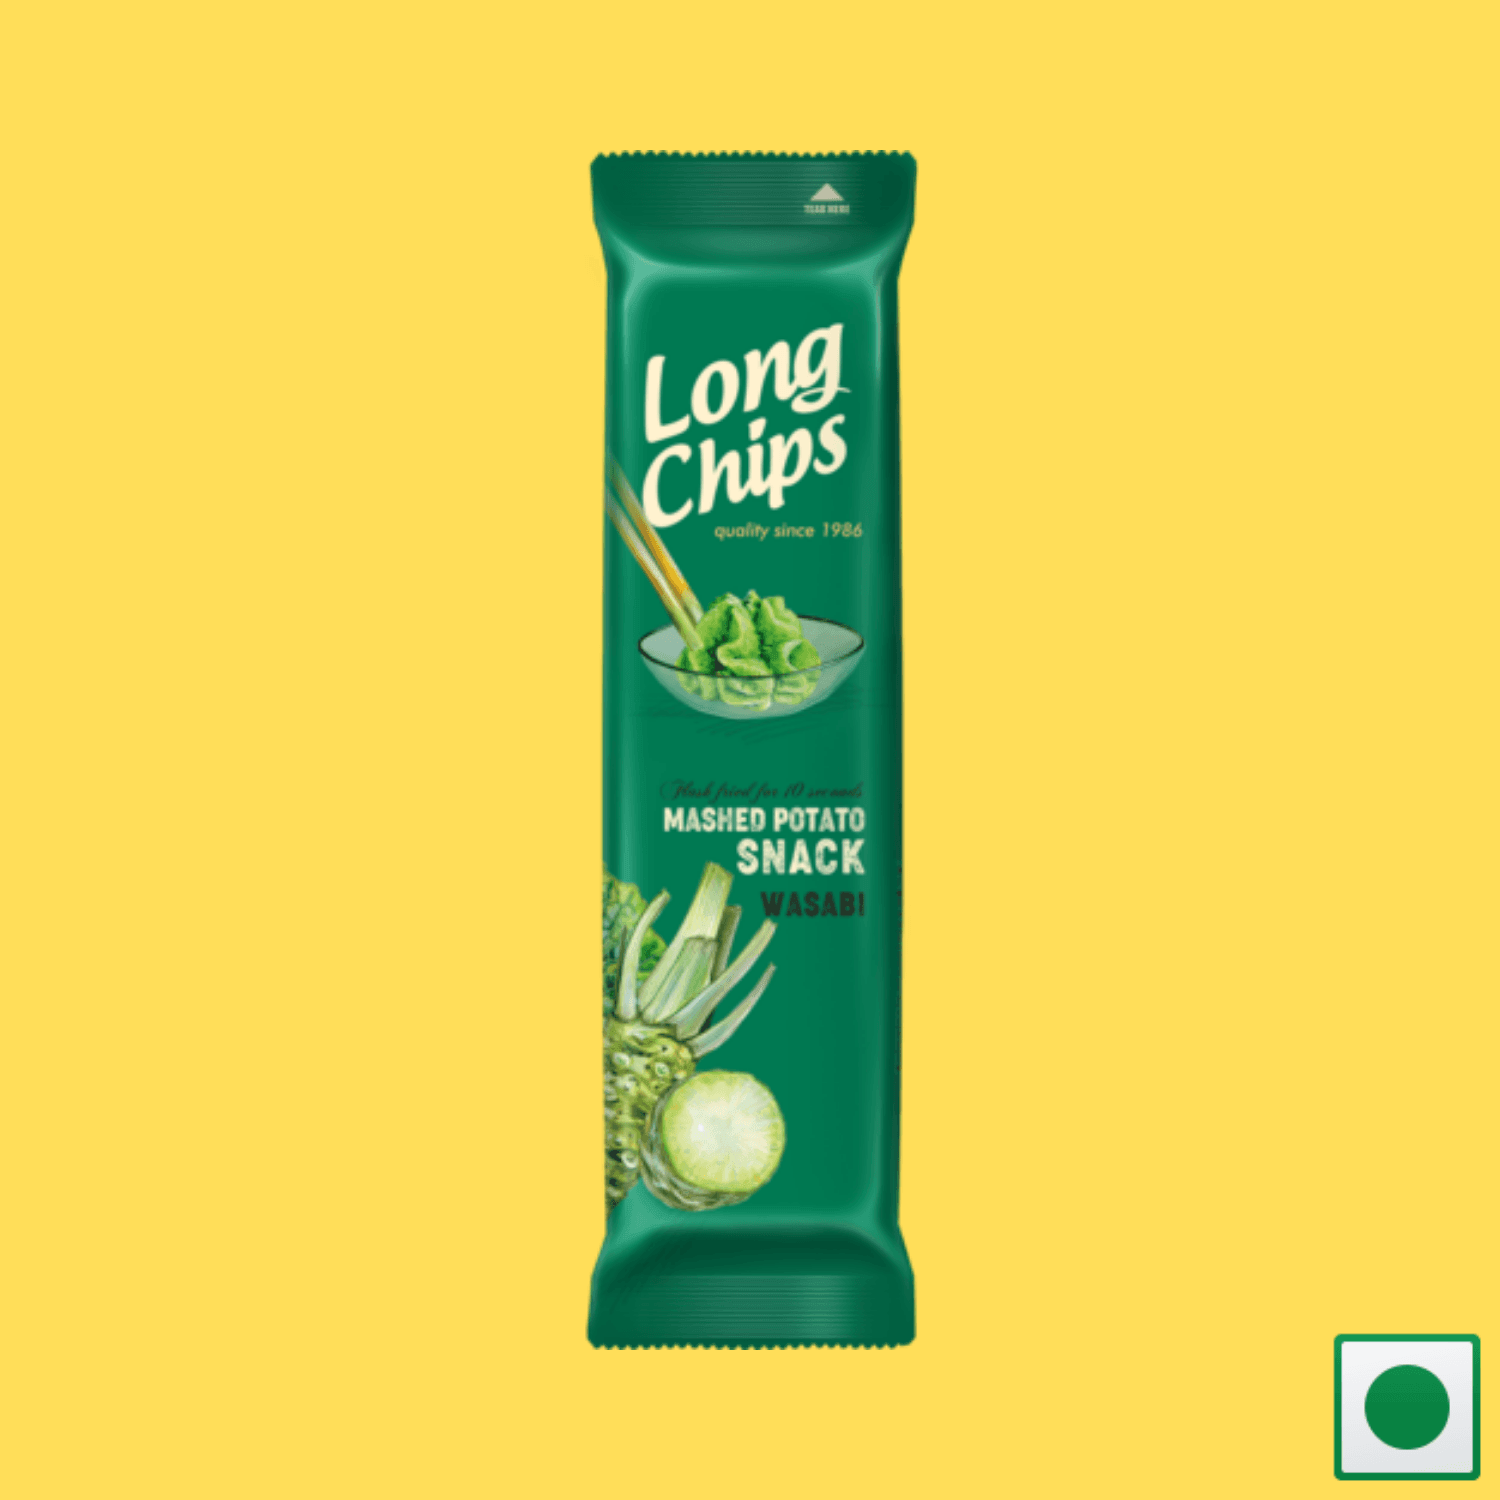 Long Chips Mashed Potato Snack Wasabi Flavoured, 75g (Imported) - Super 7 Mart